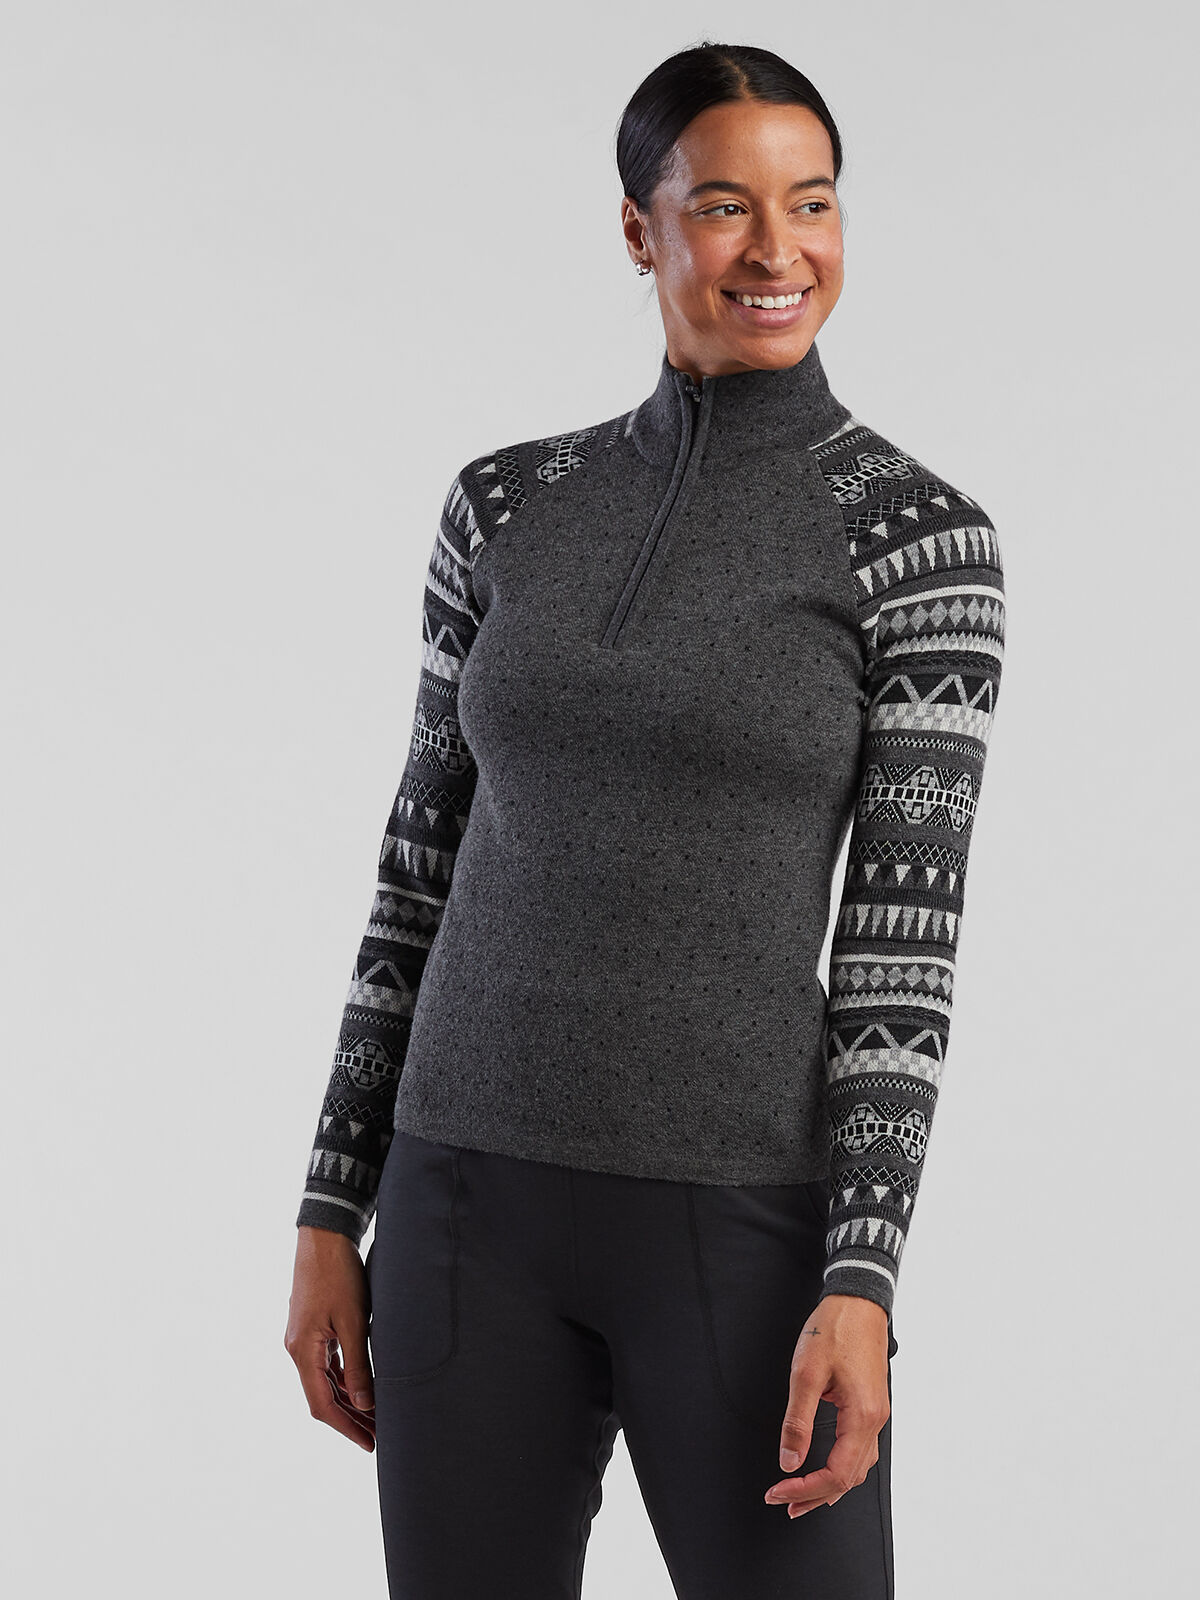 Women's Super Power 1/4 Zip Sweater: Chamonix | Title Nine